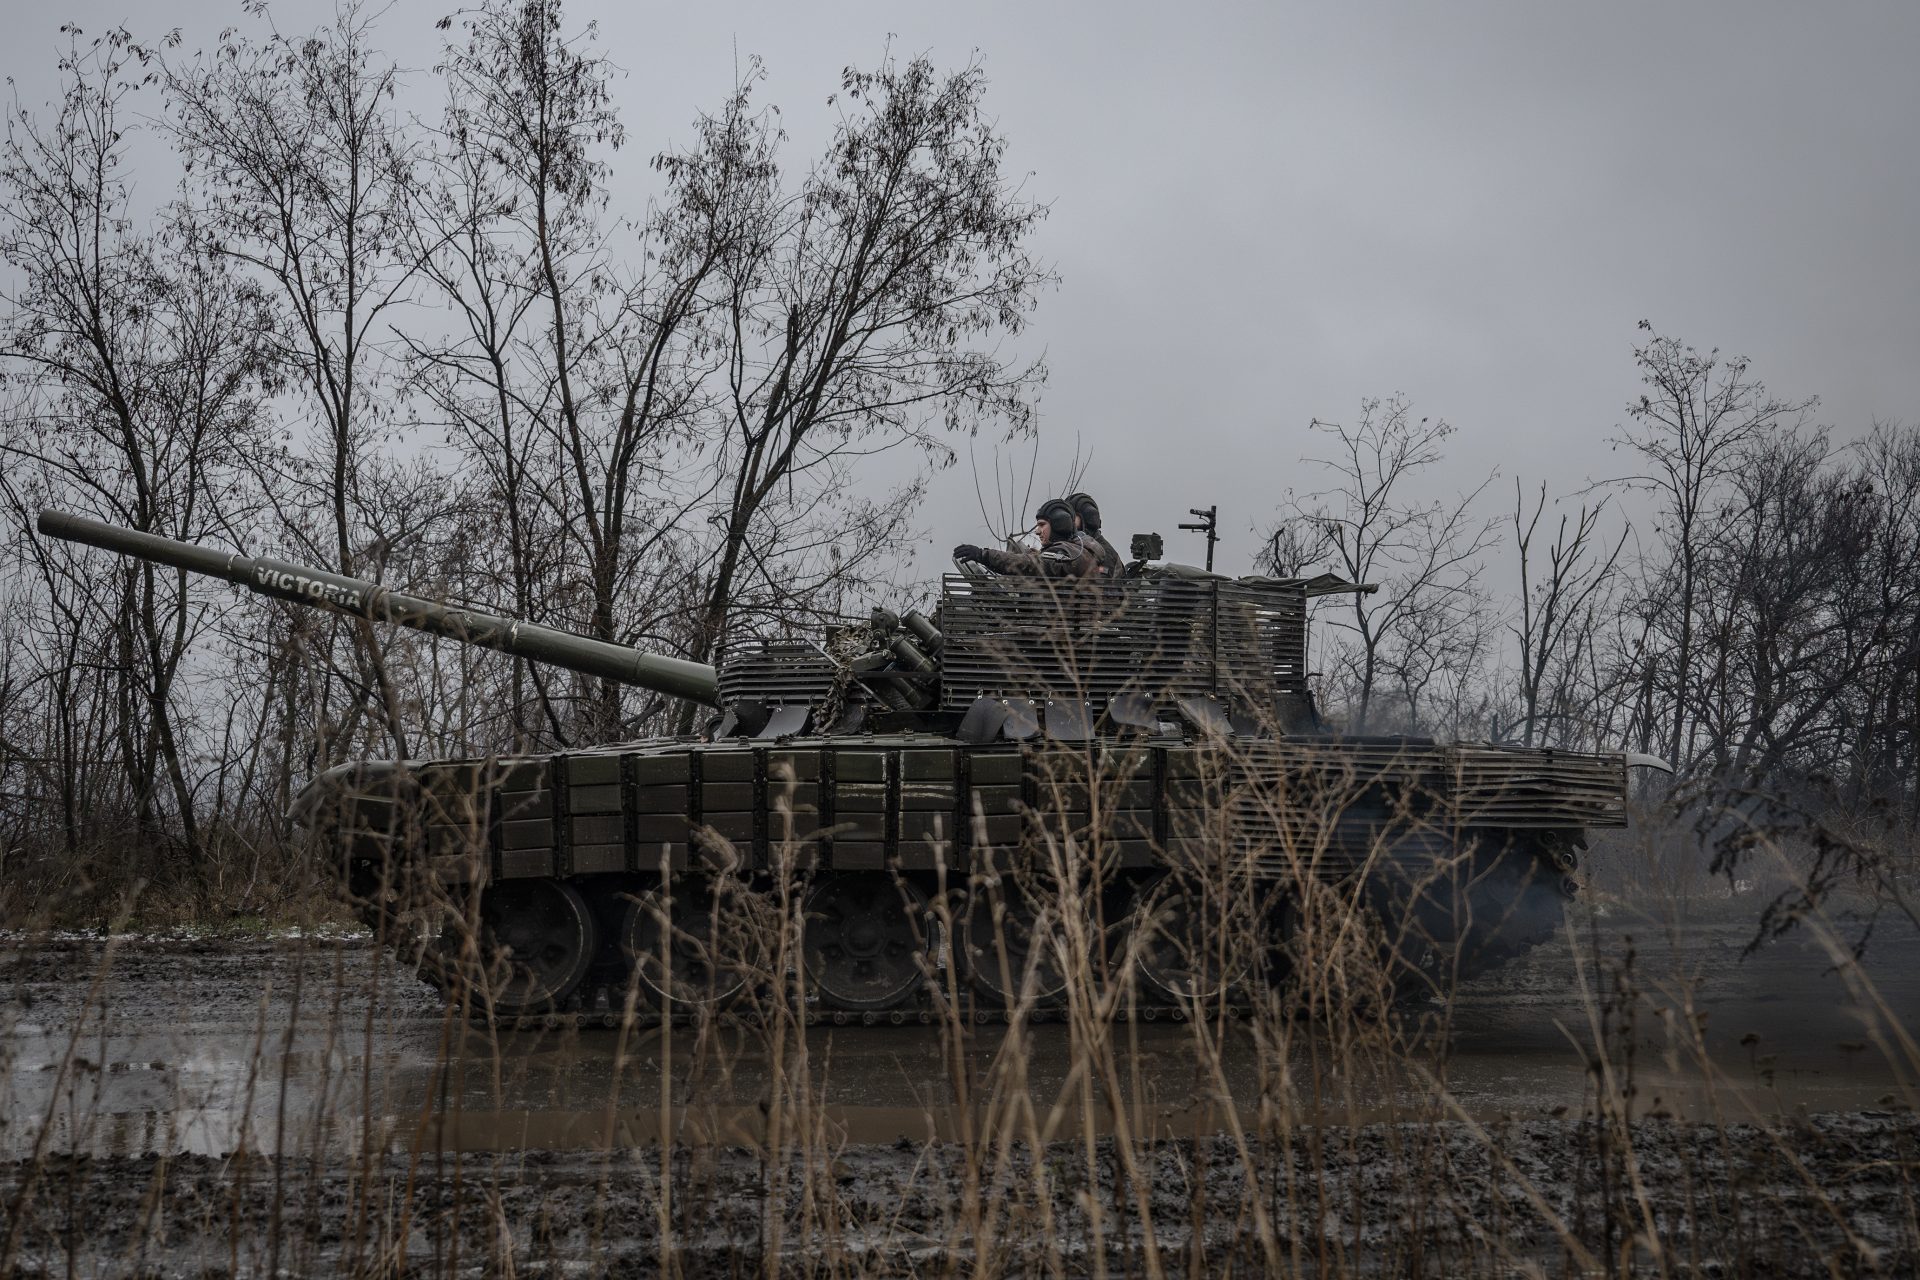 NATO chief warns world to prepare for a long war in Ukraine